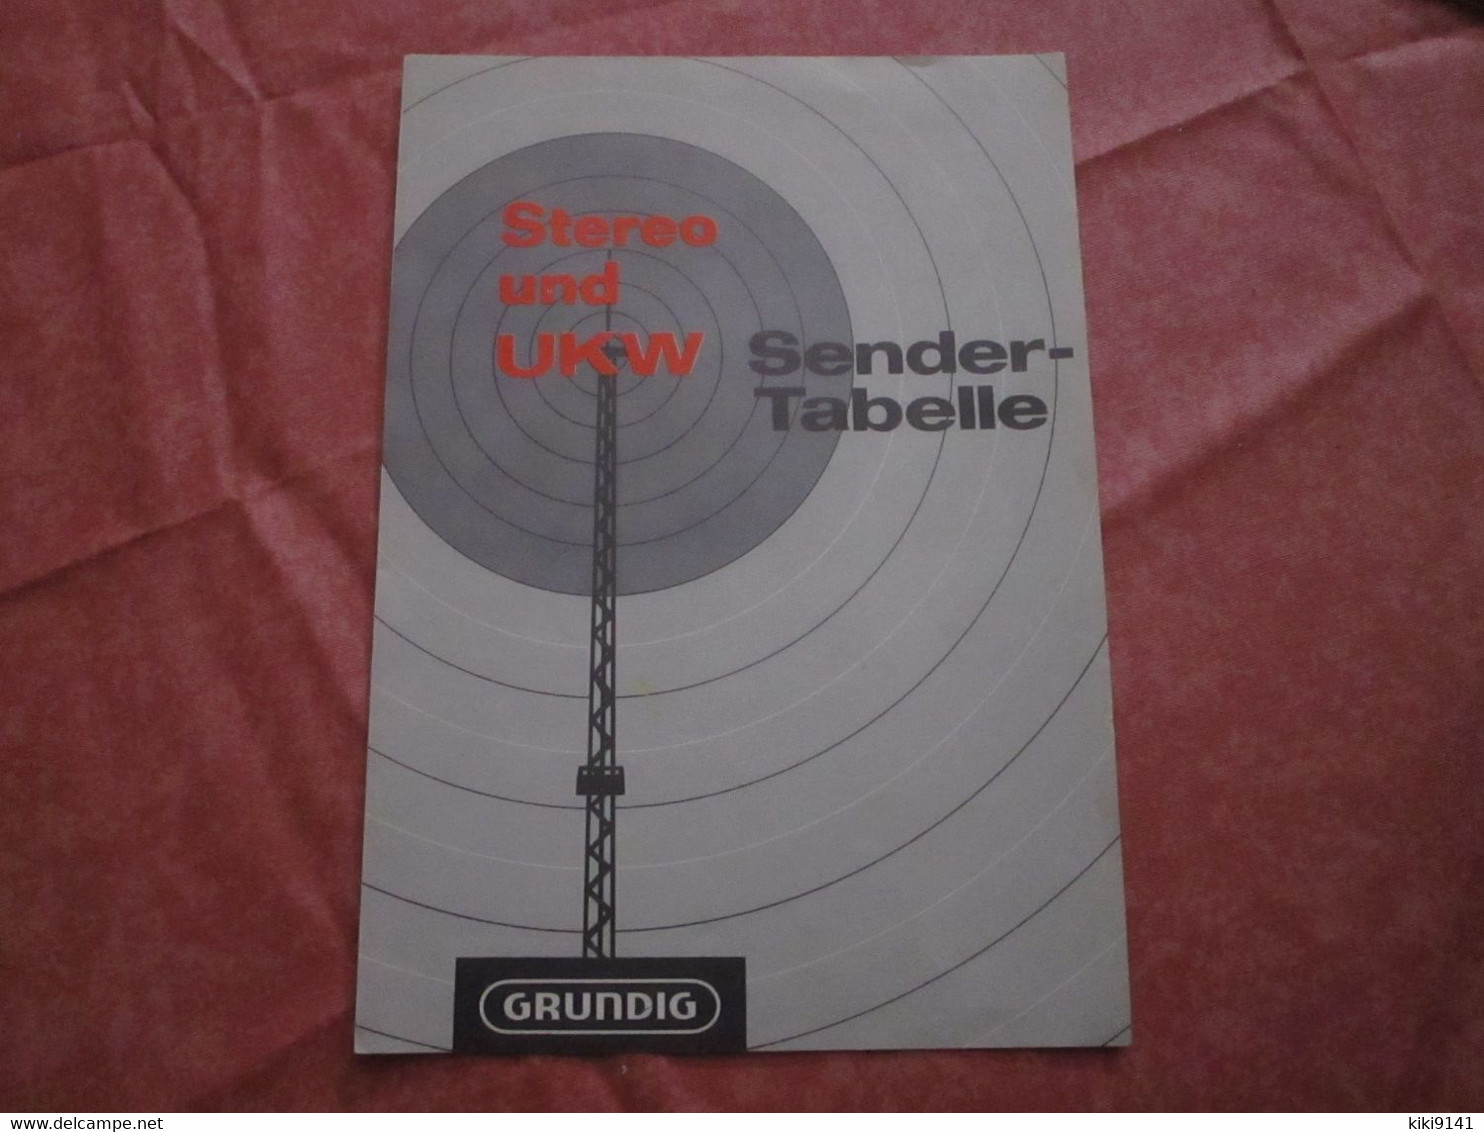 GRUNDING - Stereo Und UKW - Stender-Tabelle - Libros Y Esbozos